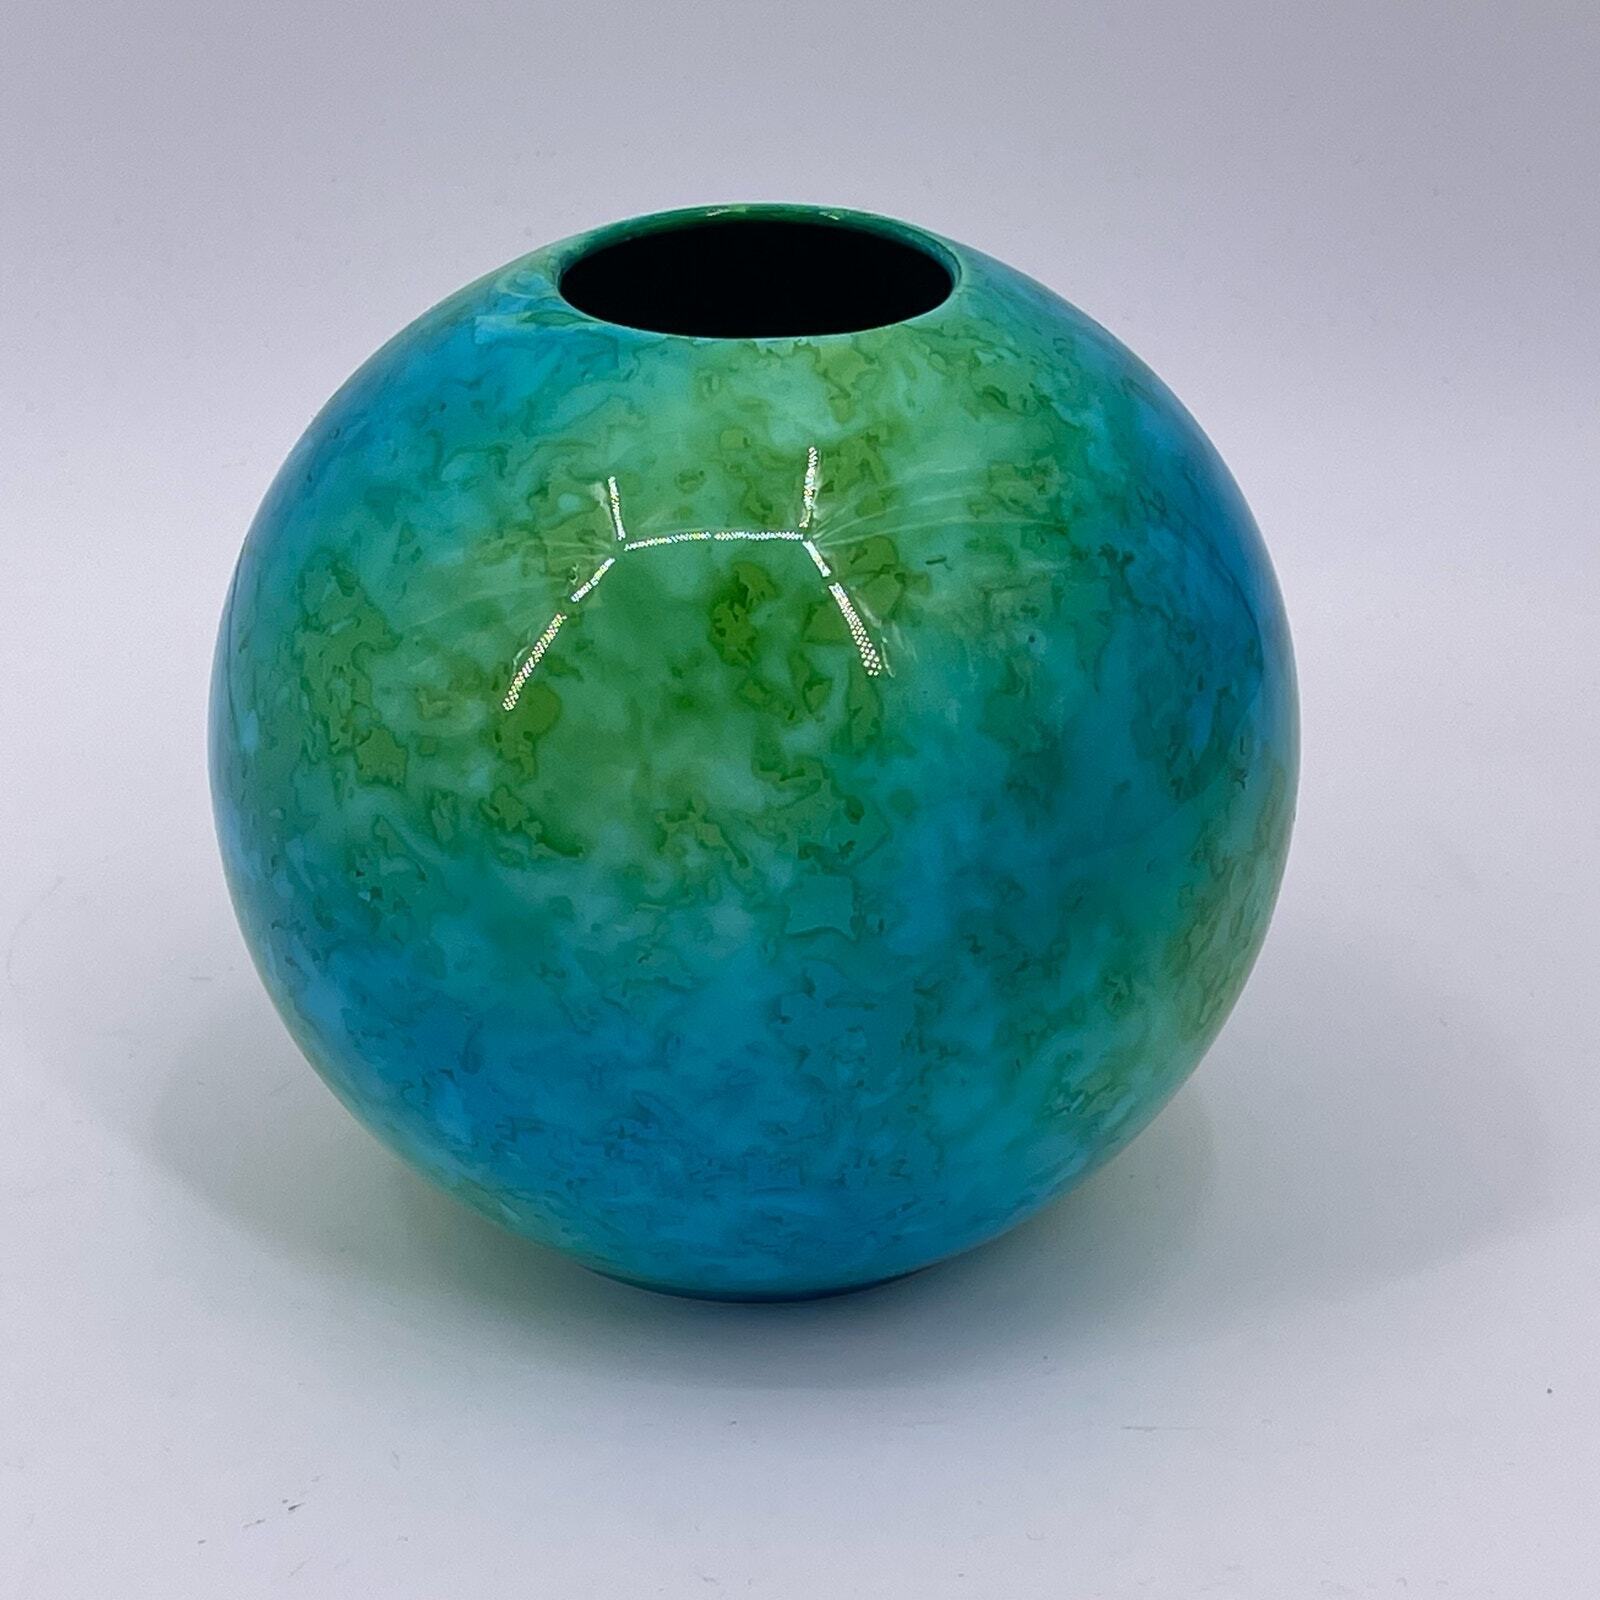 Vintage Otagiri Blue Green Round Vase 5.5 x 6 inches Decorative Made in Japan